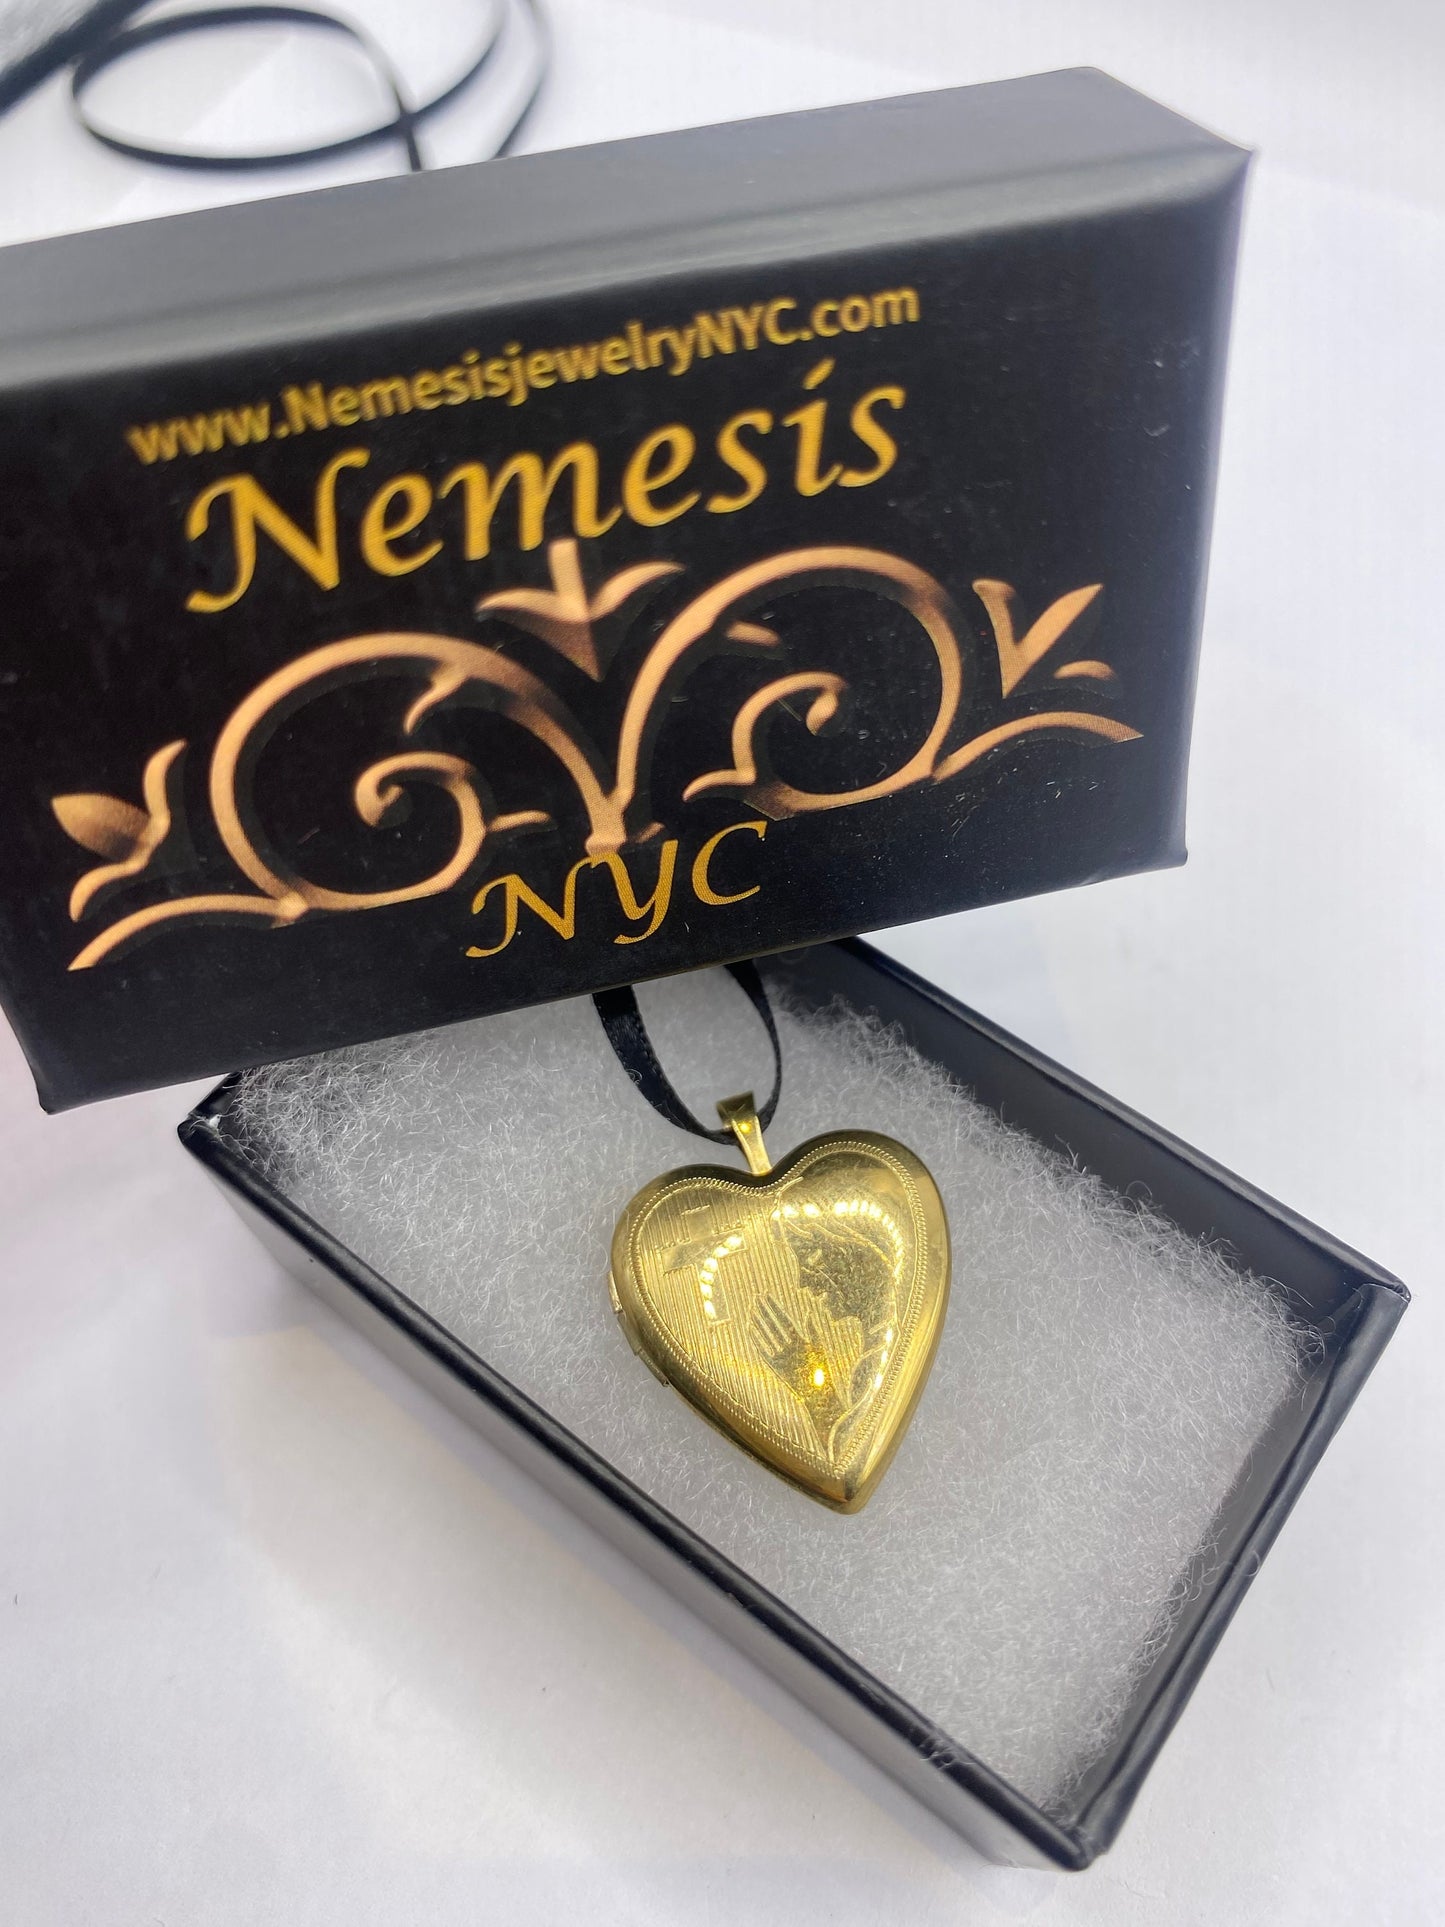 Vintage Gold Locket | Tiny Heart 9k Gold Filled Pendant Photo Memory Charm Engraved Cross Woman Prayer Hands | Choker Necklace